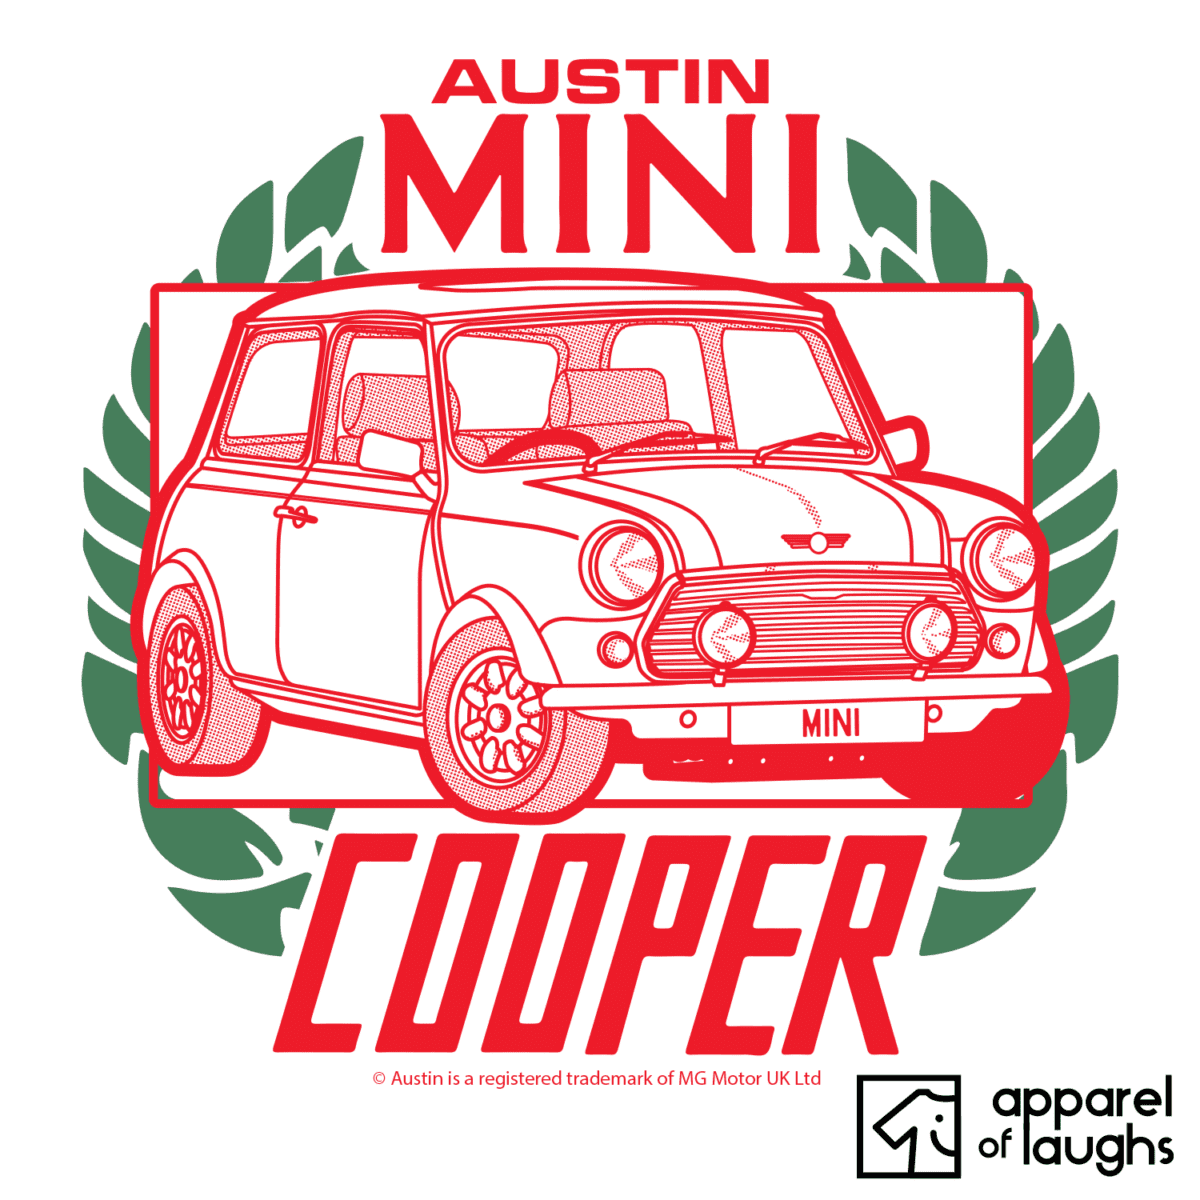 Austin Mini Cooper Car Brand Vintage Retro British Leyland Motoring Heritage T-Shirt Design White